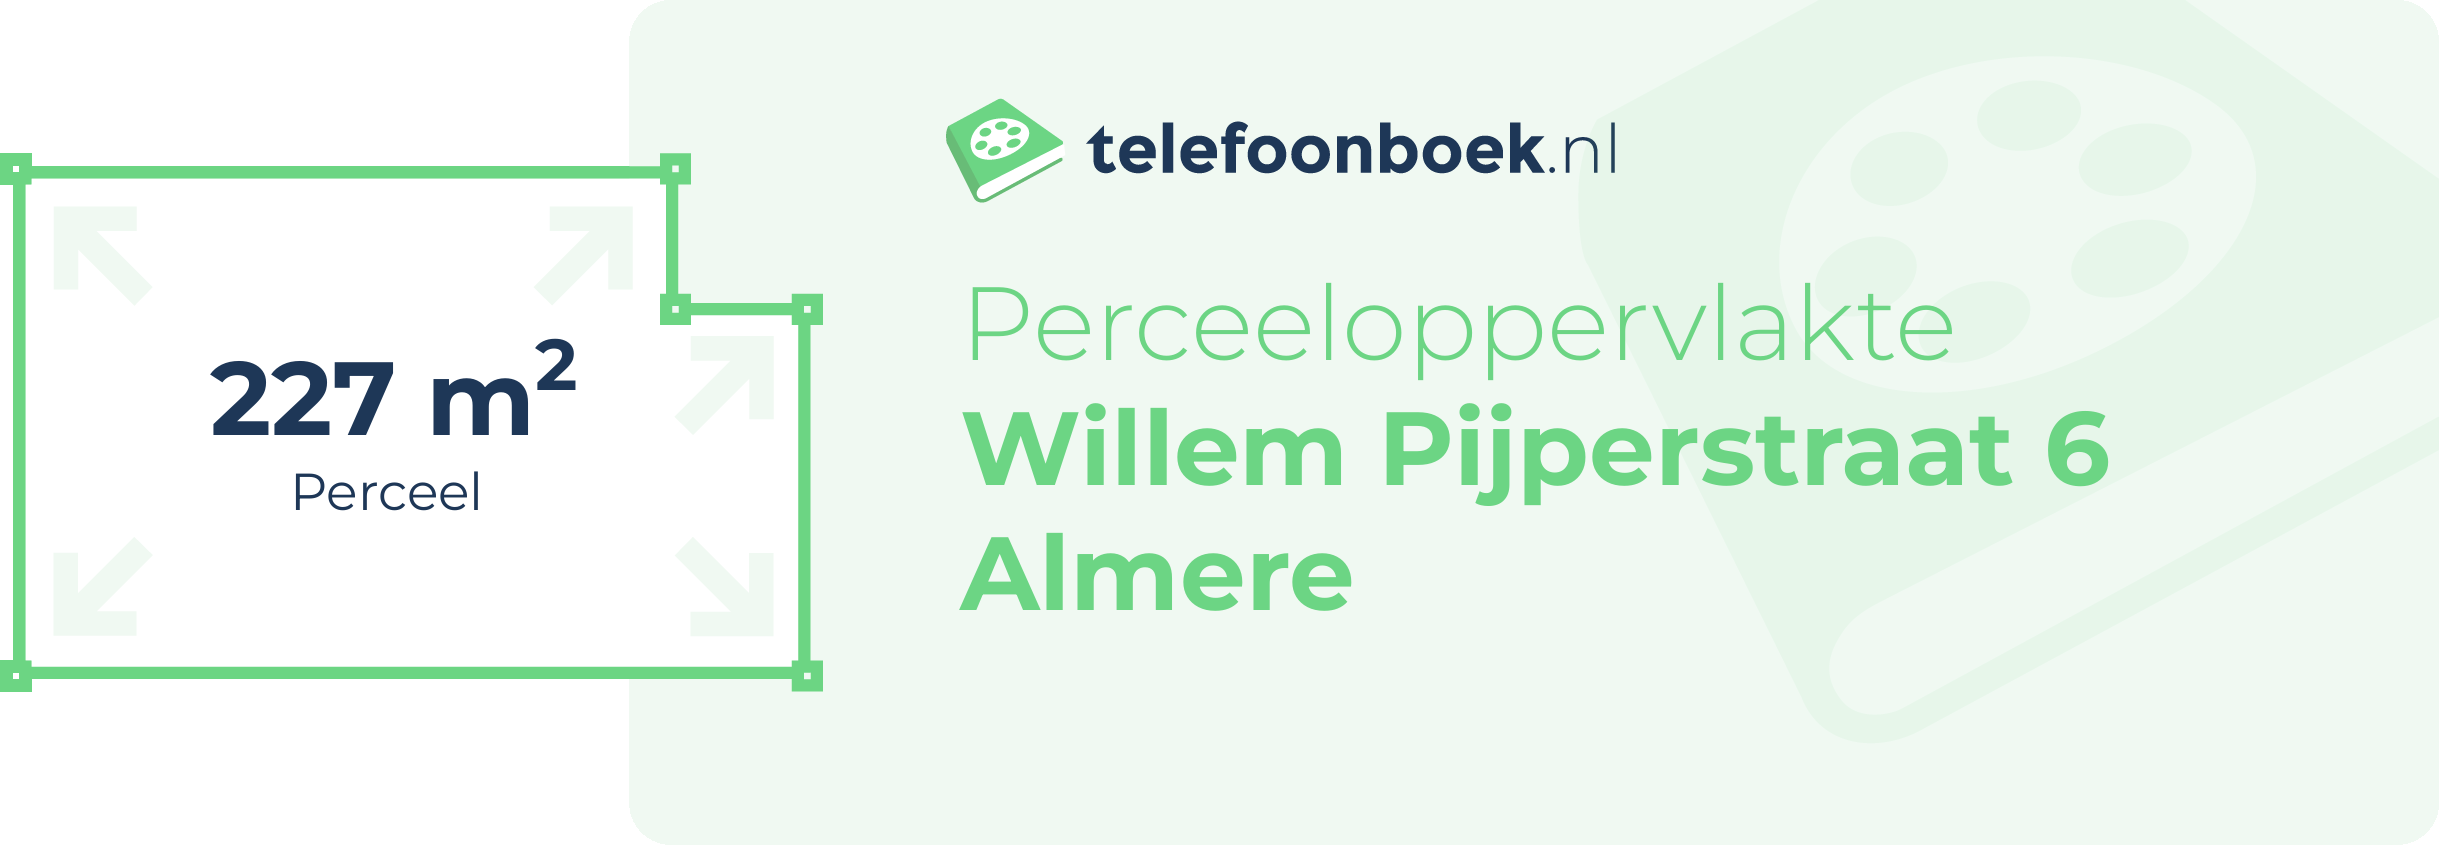 Perceeloppervlakte Willem Pijperstraat 6 Almere